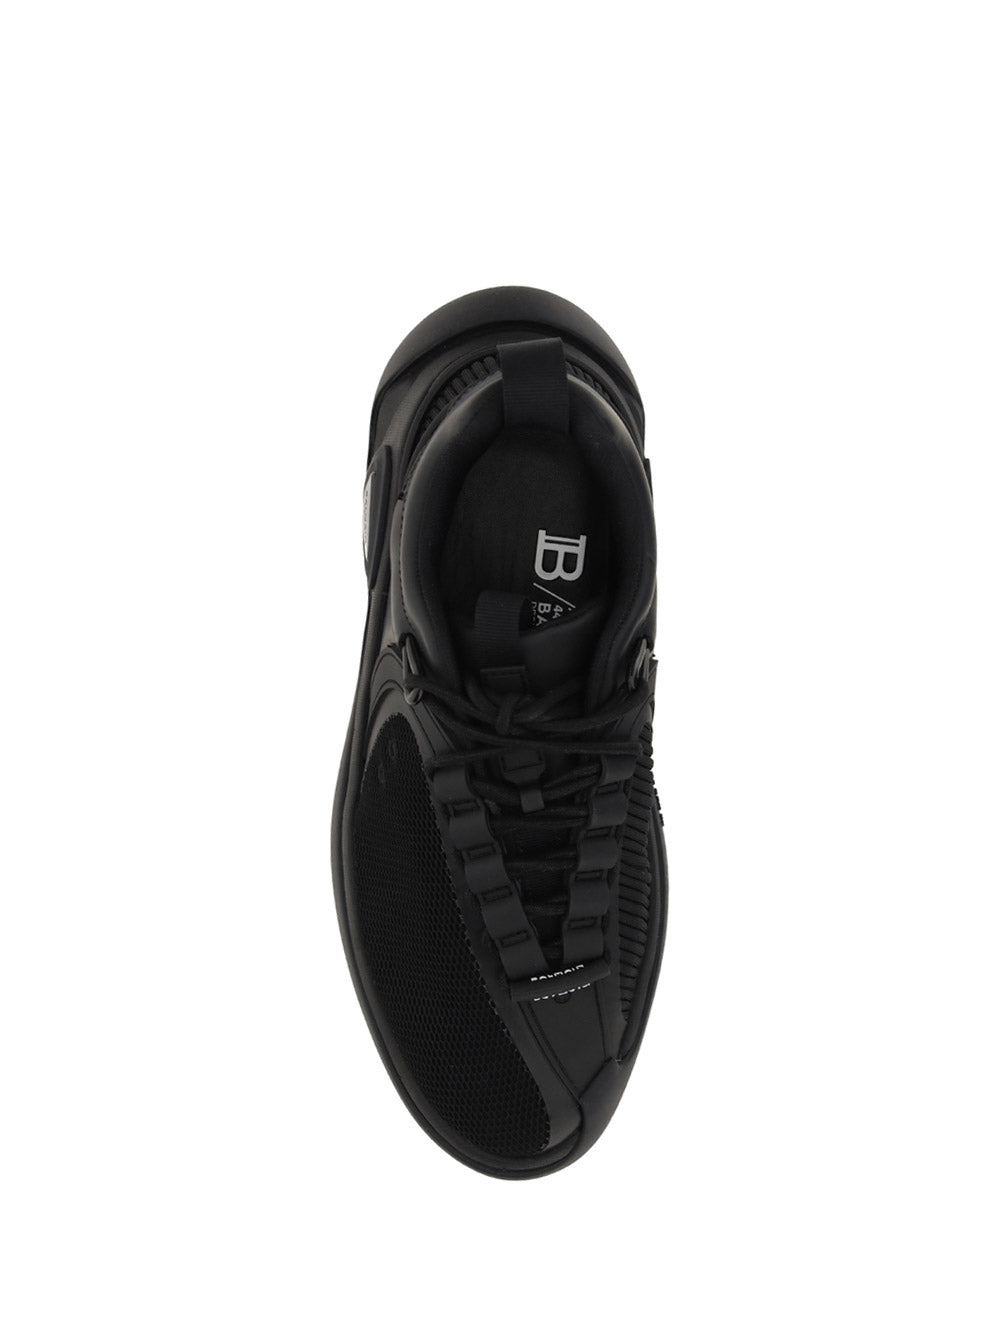 Reflective Material and Mesh B-Runner Sneakers - Black